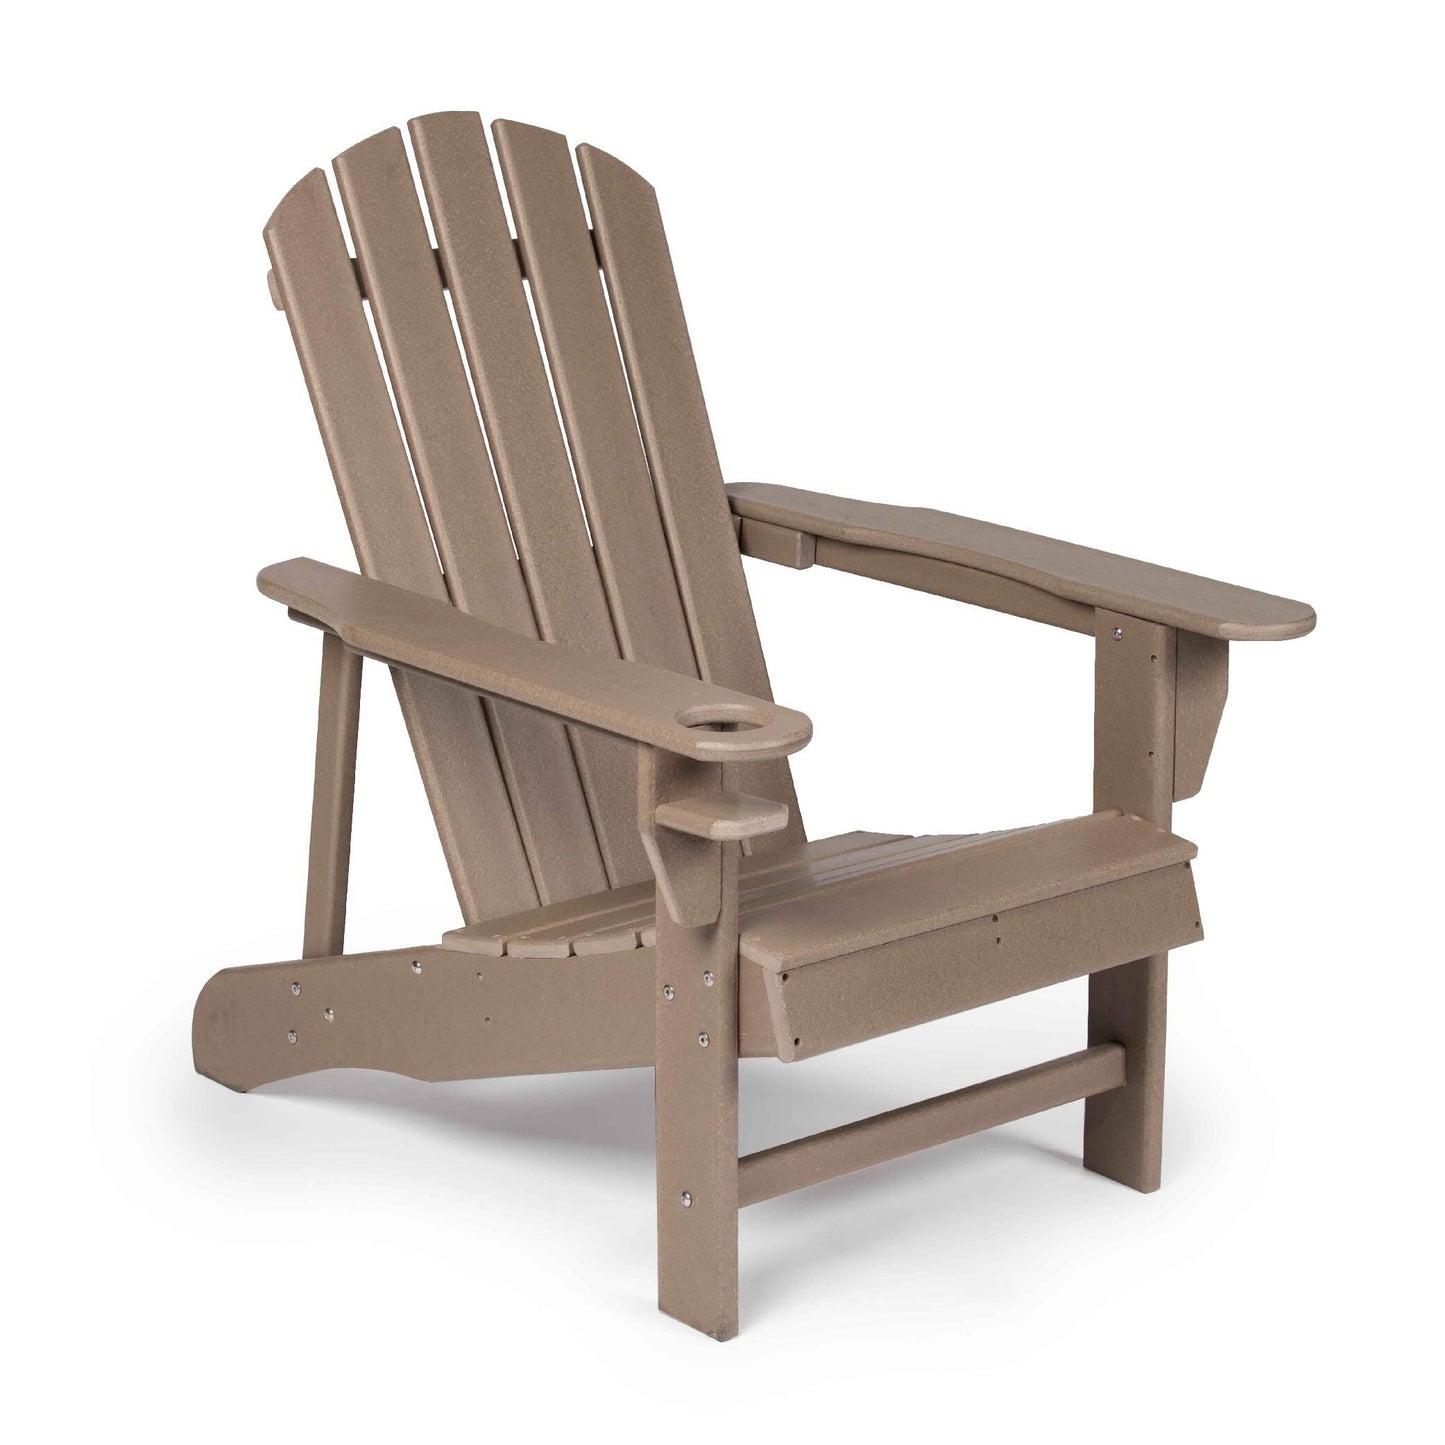 Everwood Hilltop Adirondack Chair - Adirondack Chair Color: Driftwood | Driftwood - view 1